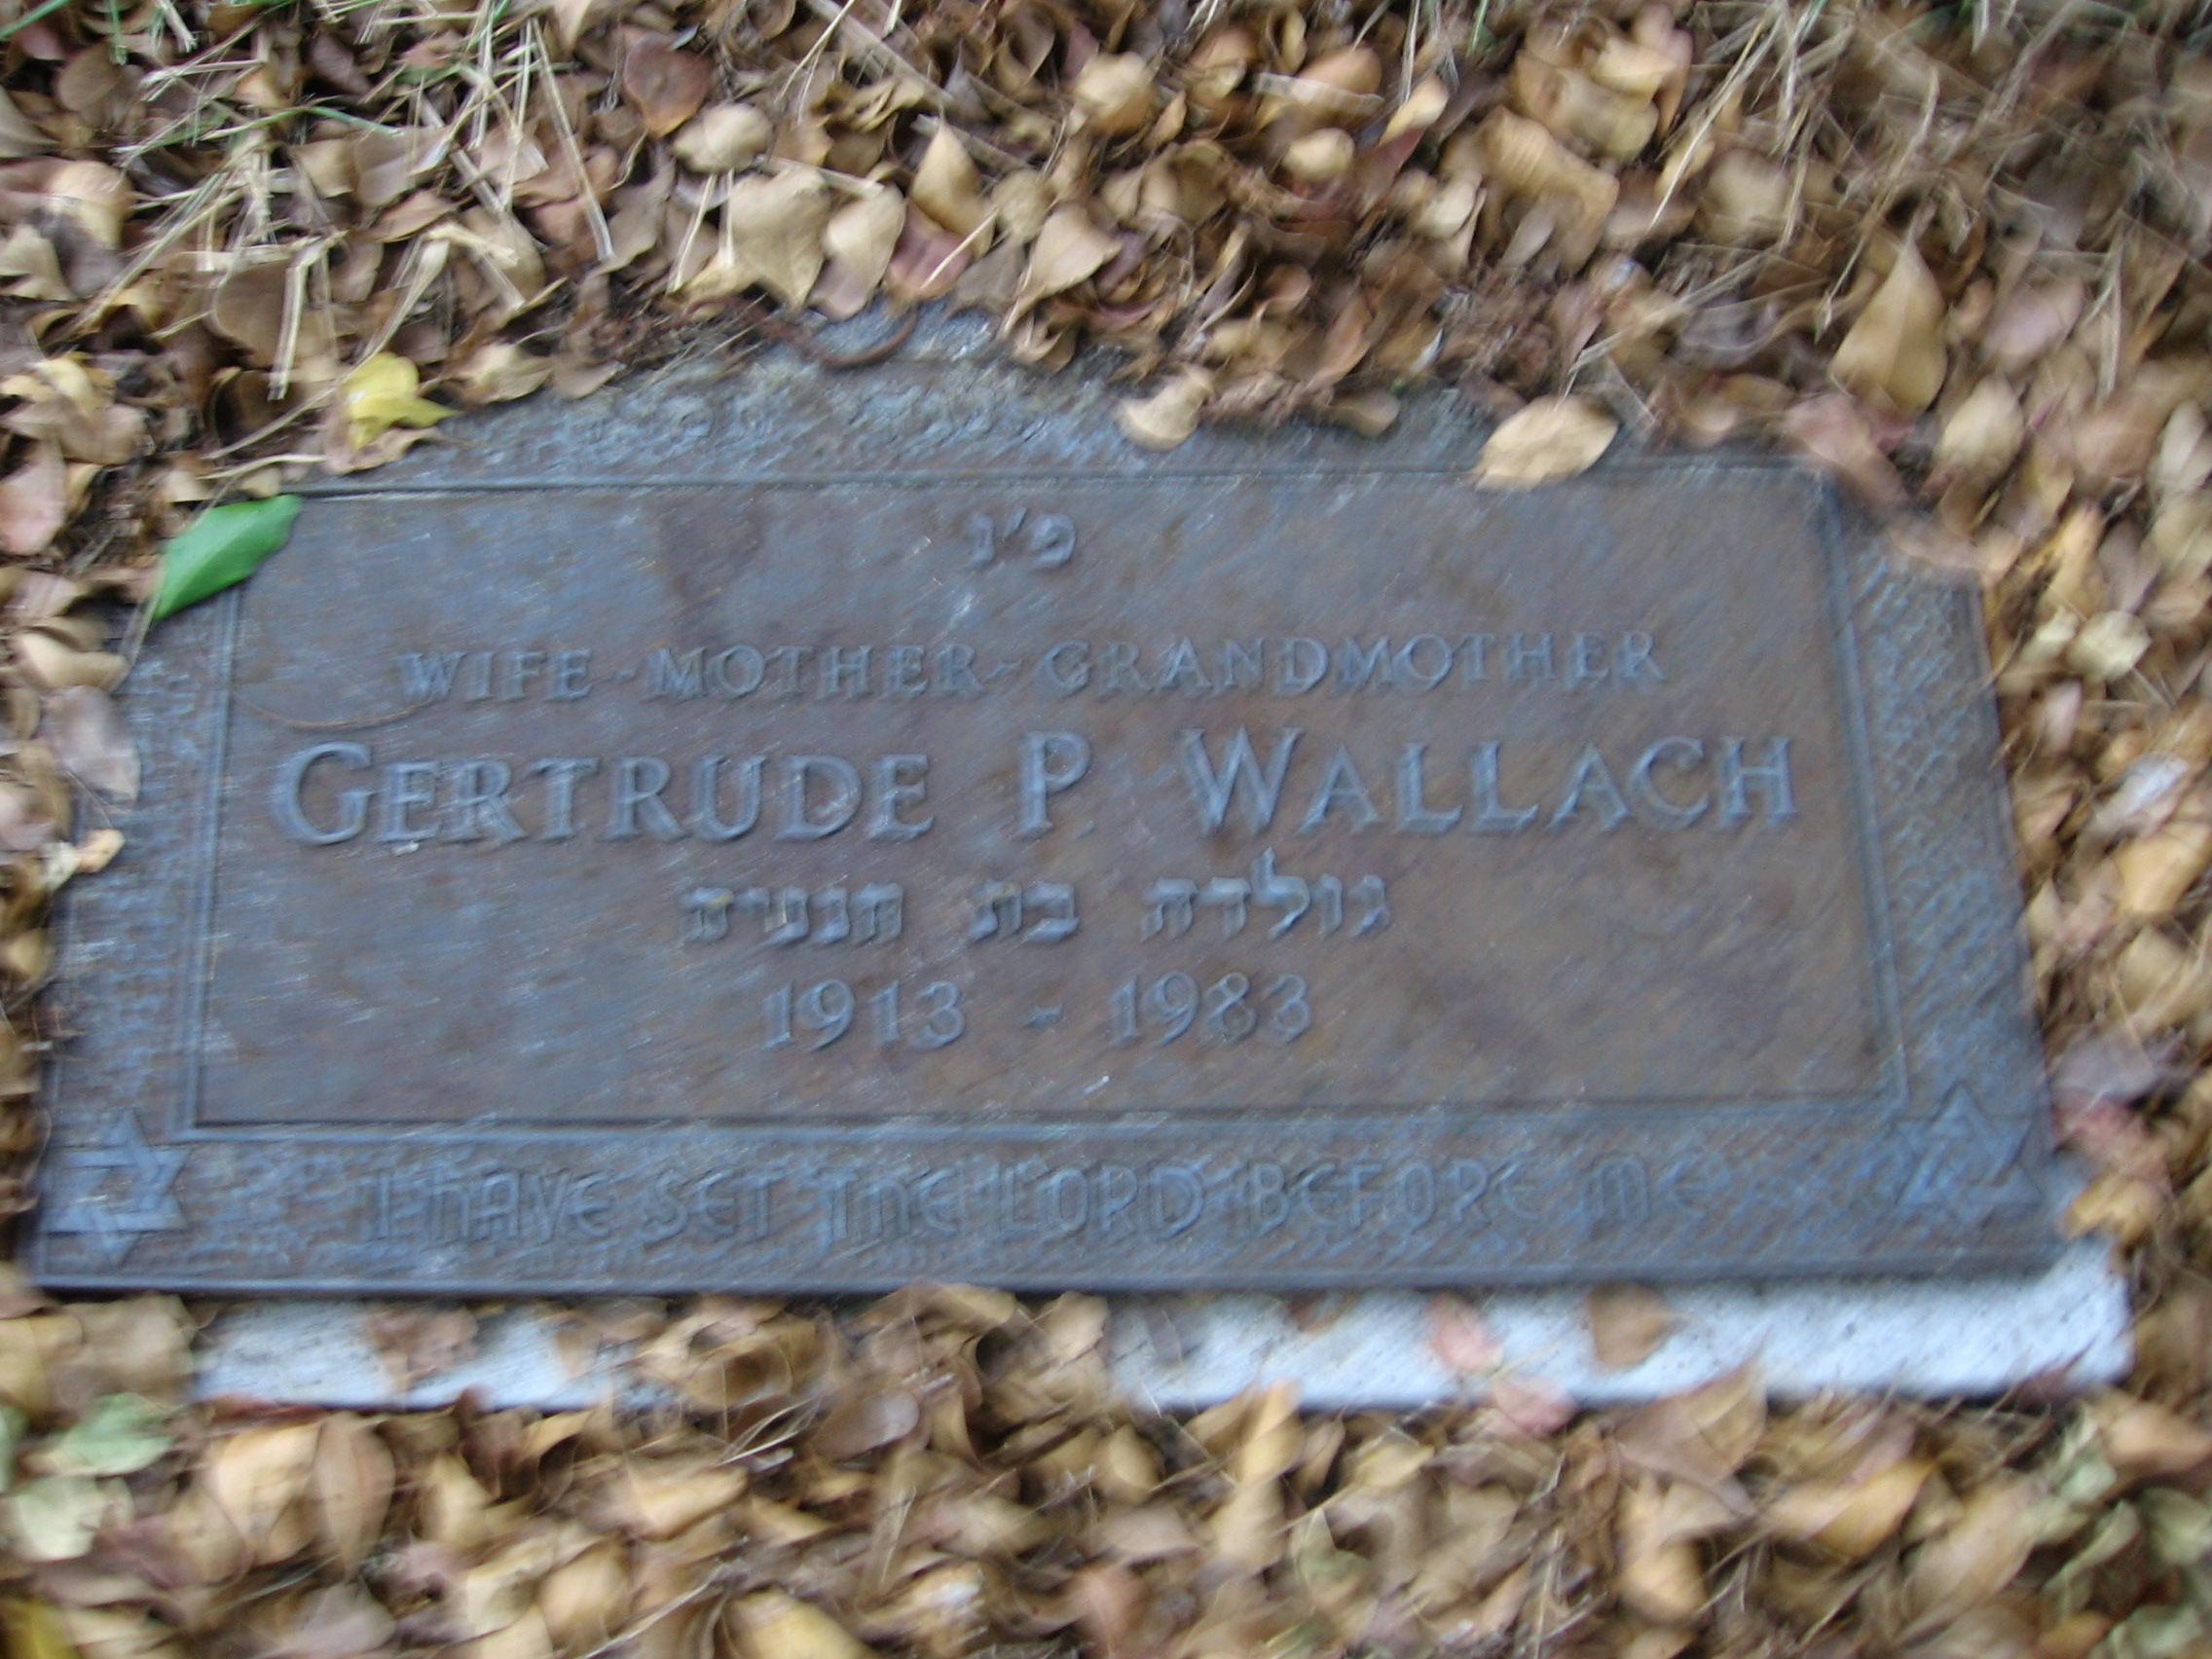 Gertrude P Wallach